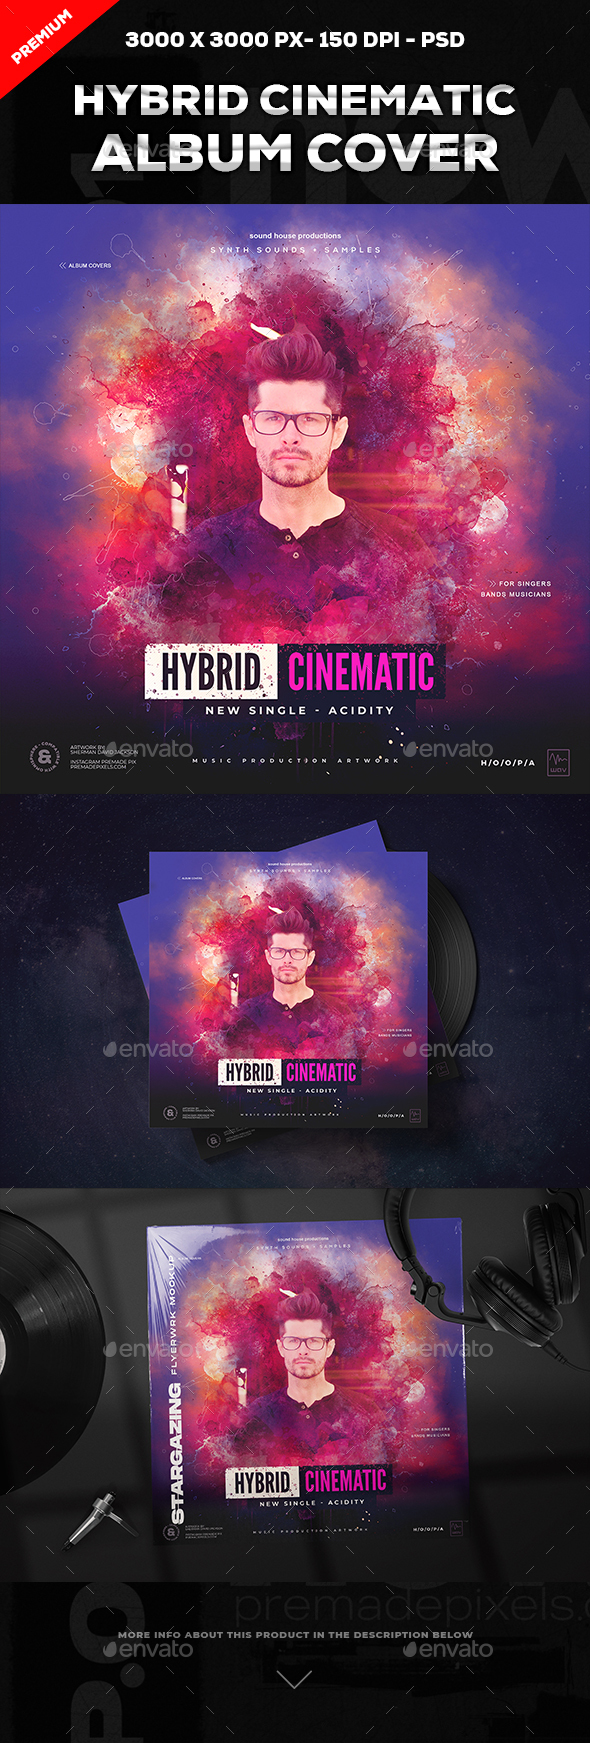 [DOWNLOAD]Hybrid Cinematic Album Cover